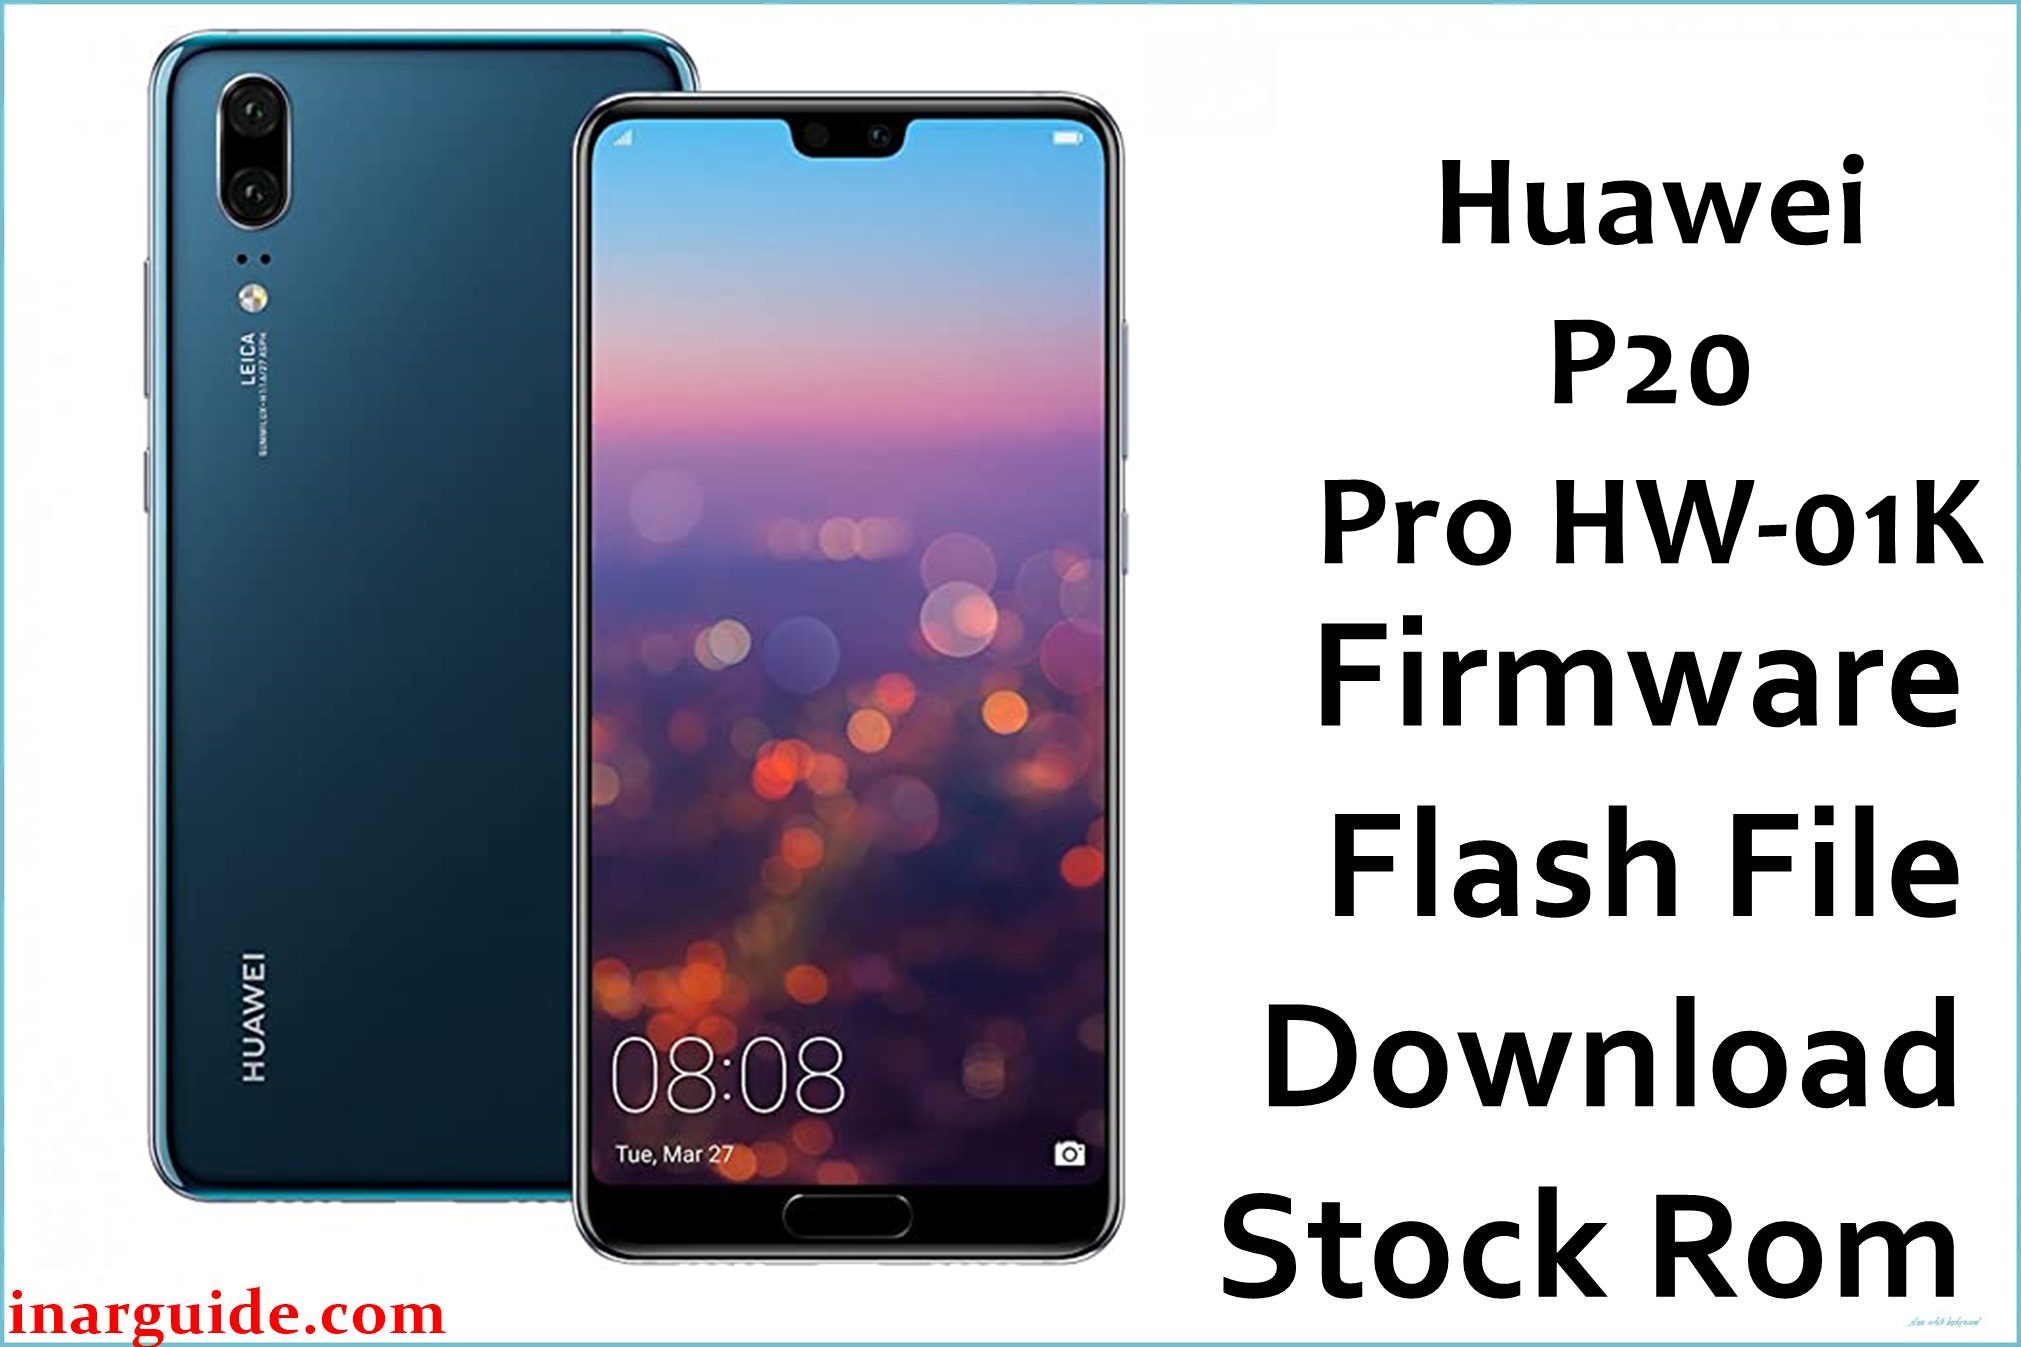 Huawei P20 Pro HW 01K